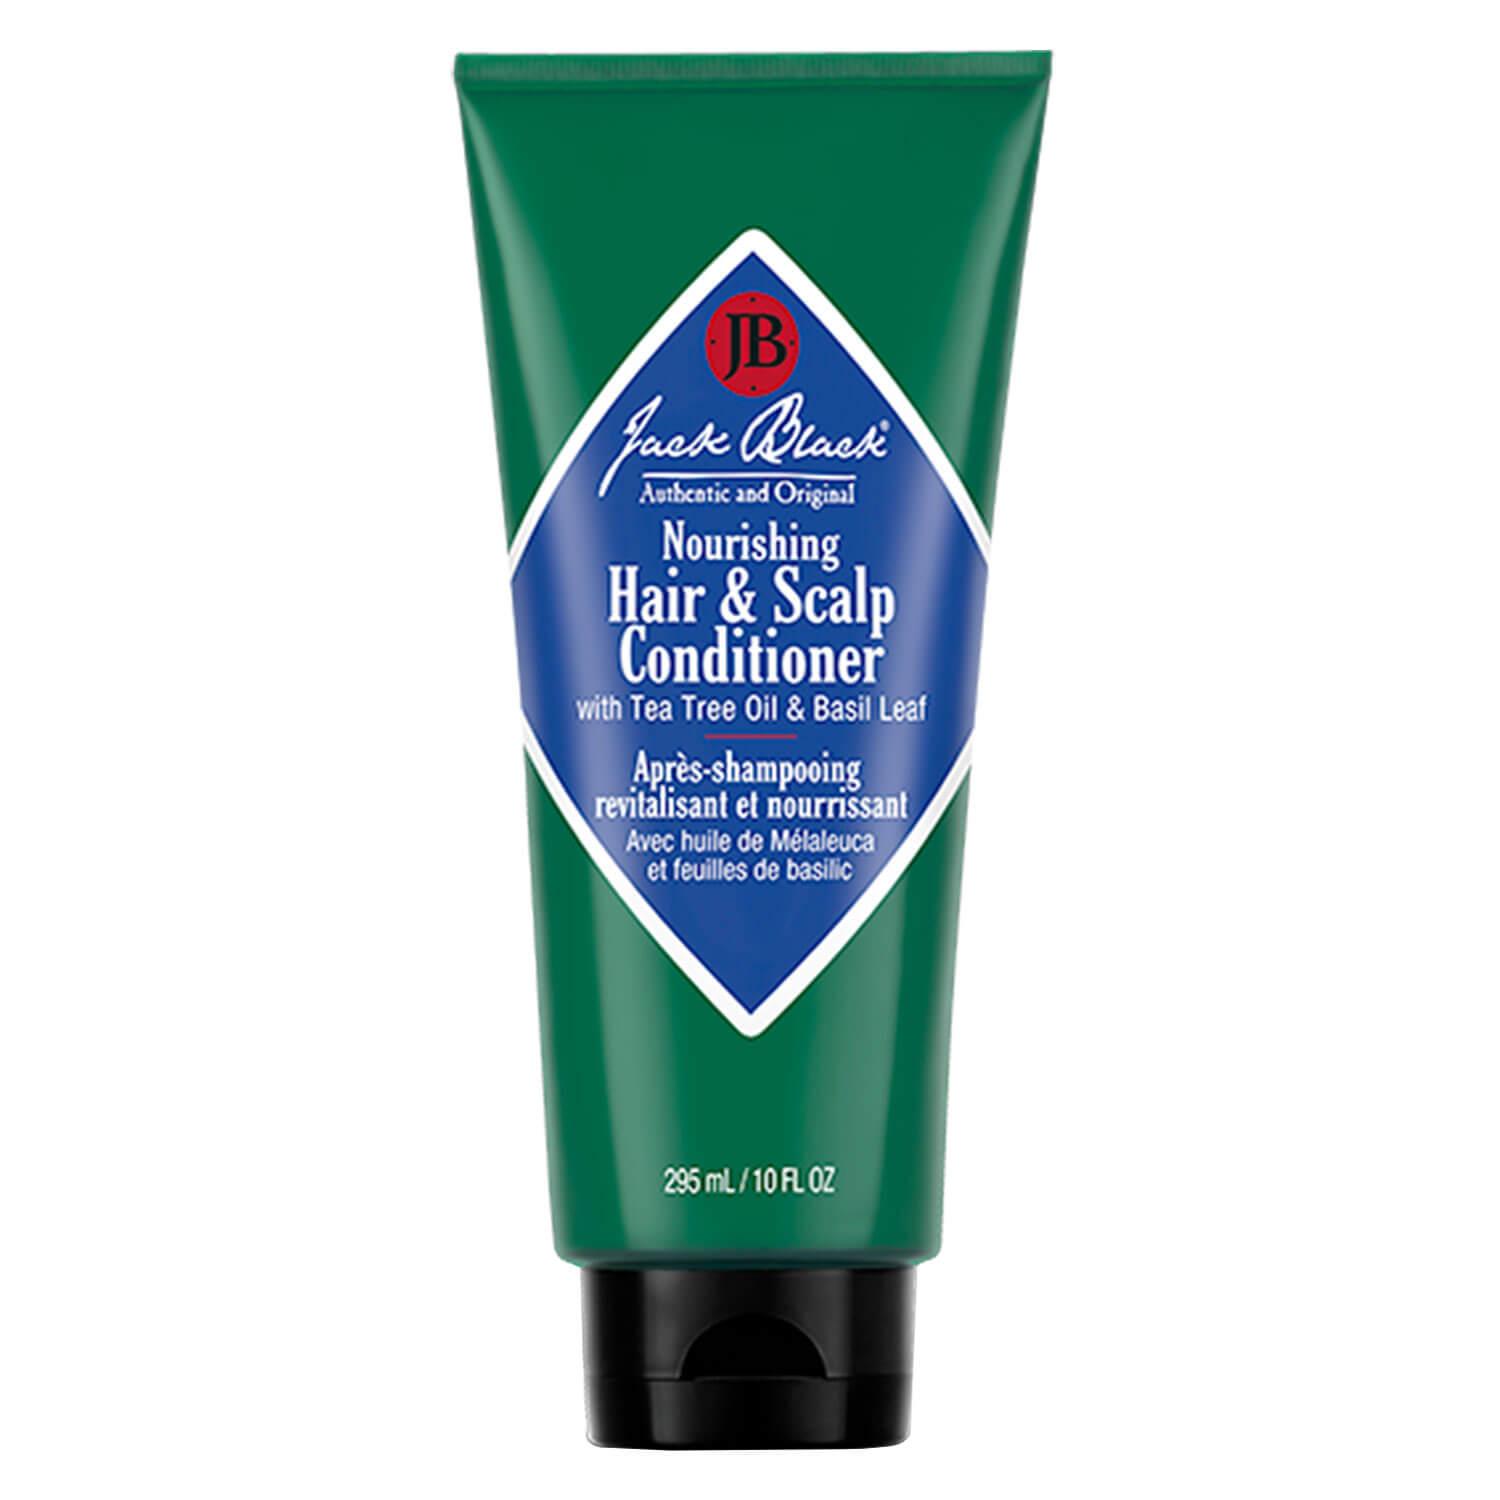 Jack Black - Nourishining Hair & Scalp Conditioner